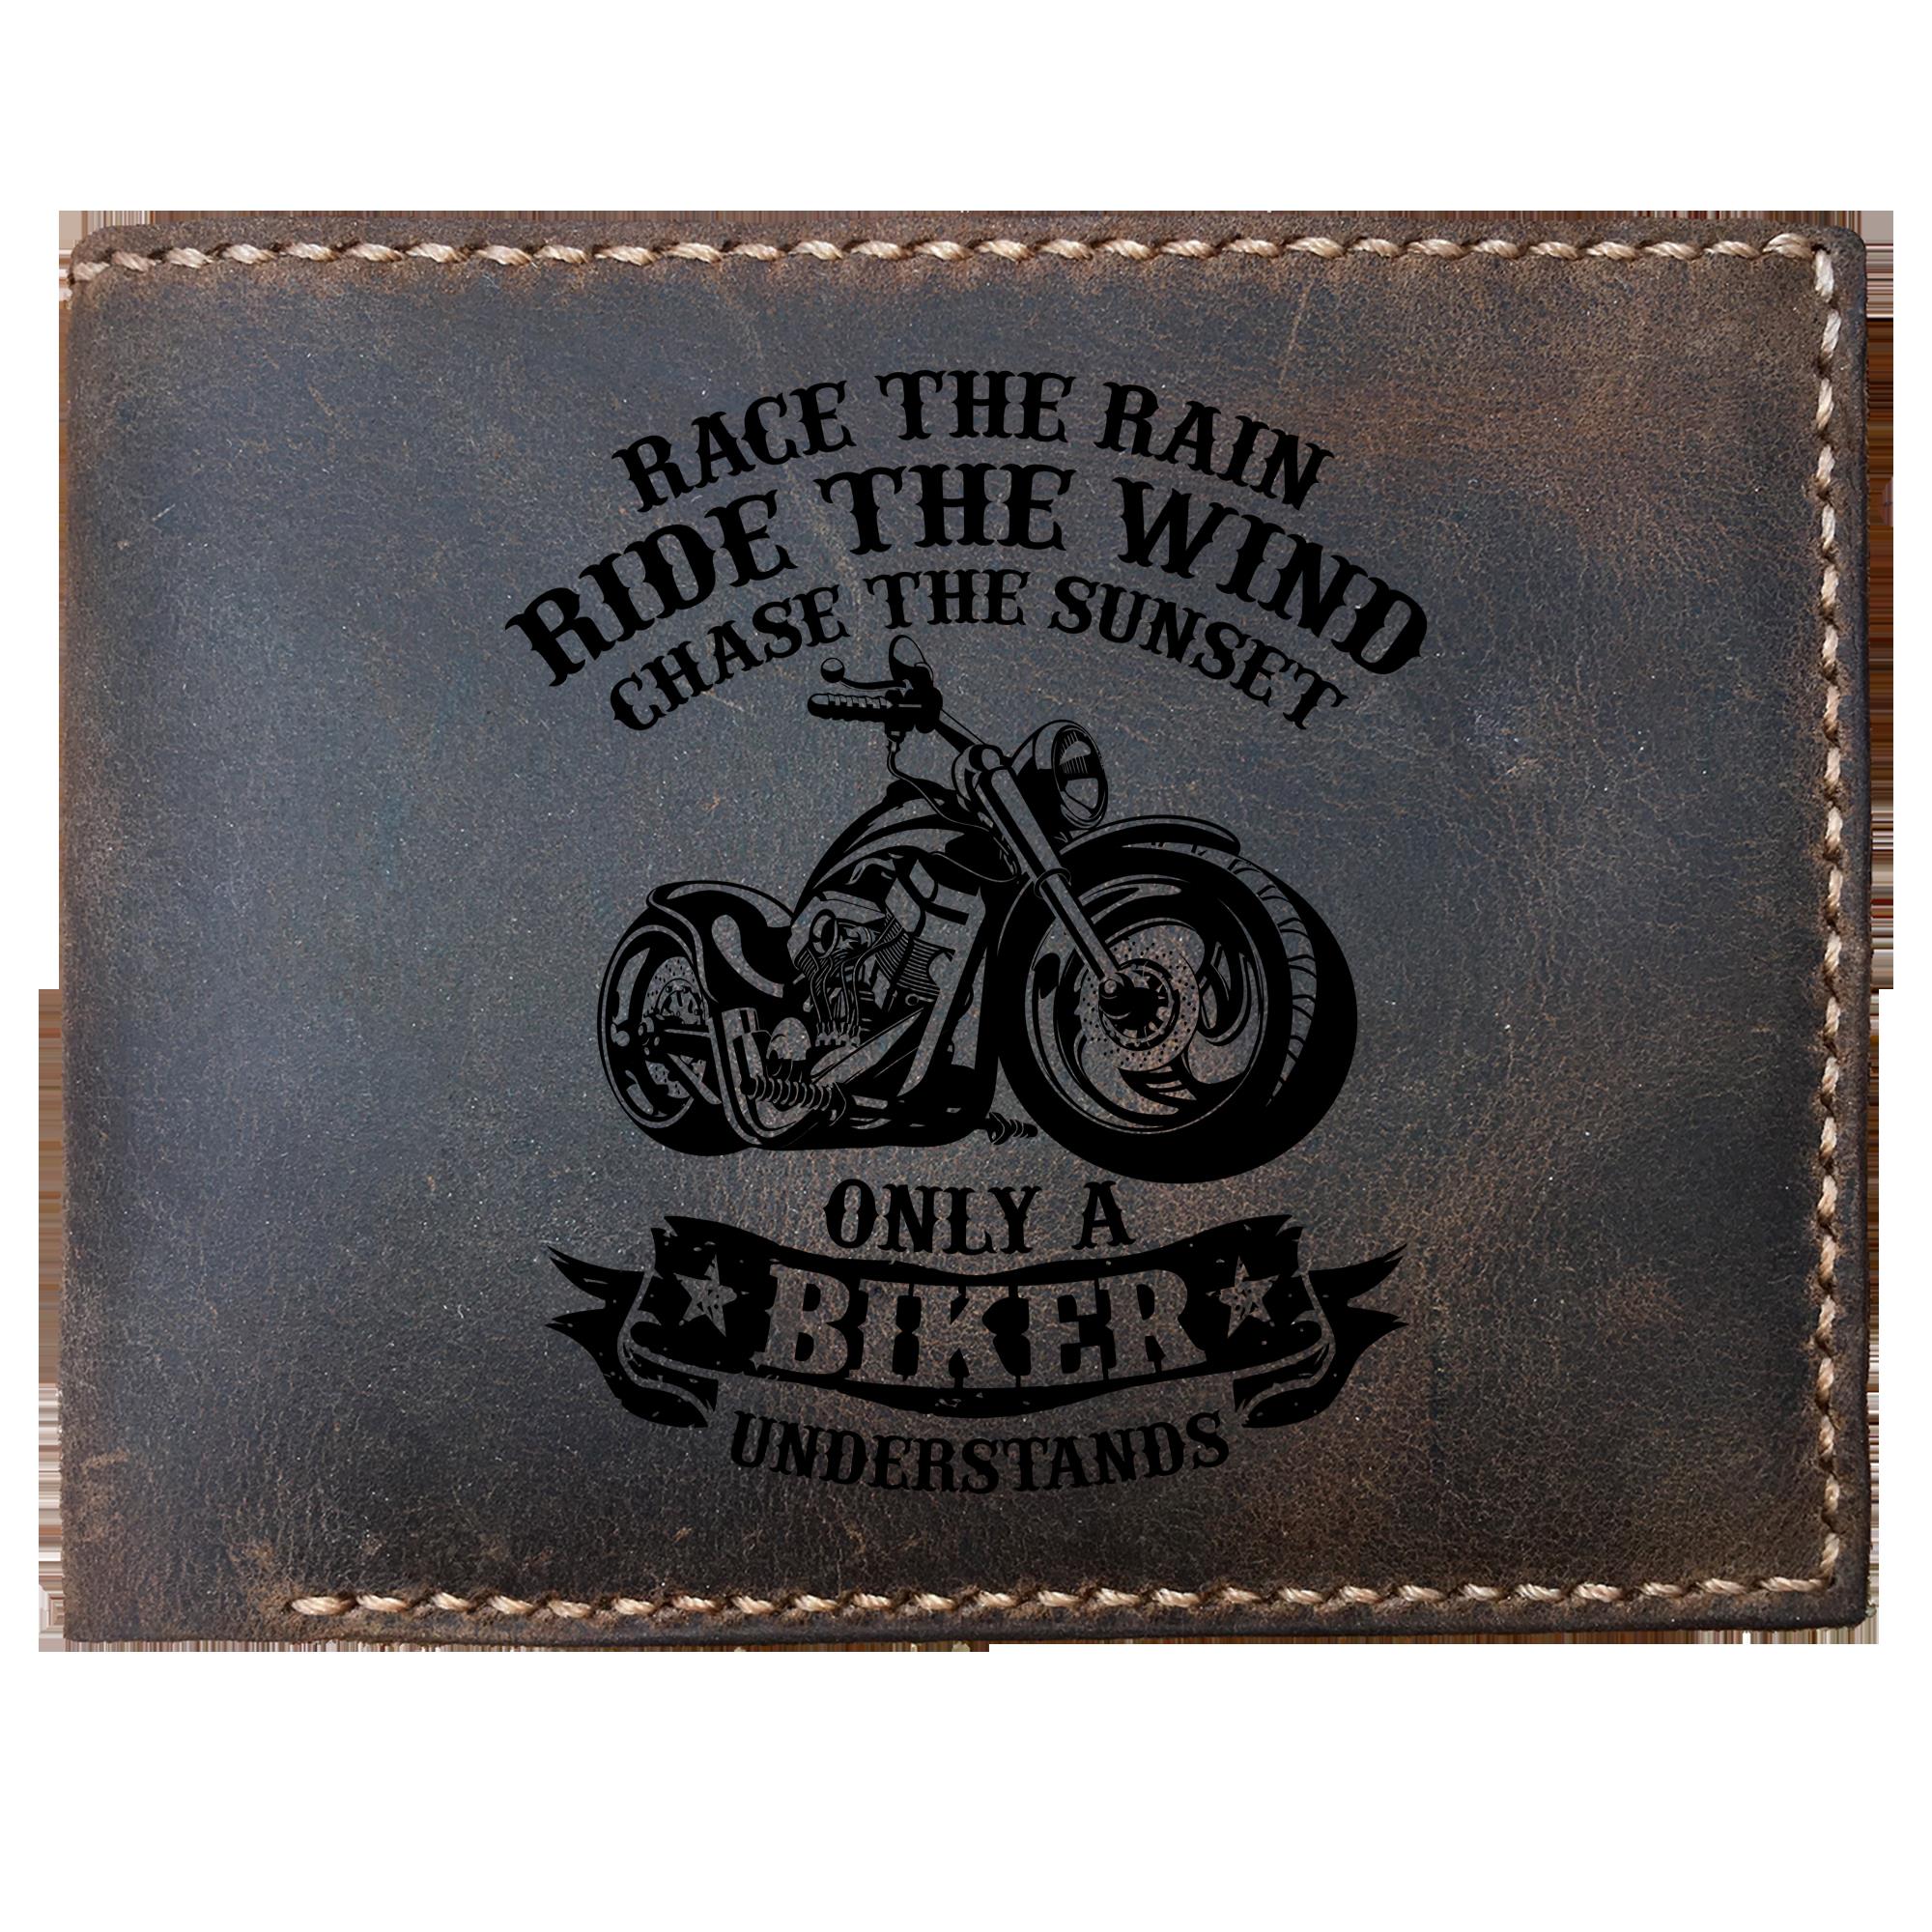 Skitongifts Funny Custom Engraved Bifold Leather Wallet, Race Rain Ride Wind Chase Sunset Biker Motorcycle Street Extreme Sports Rack Harley Davidson